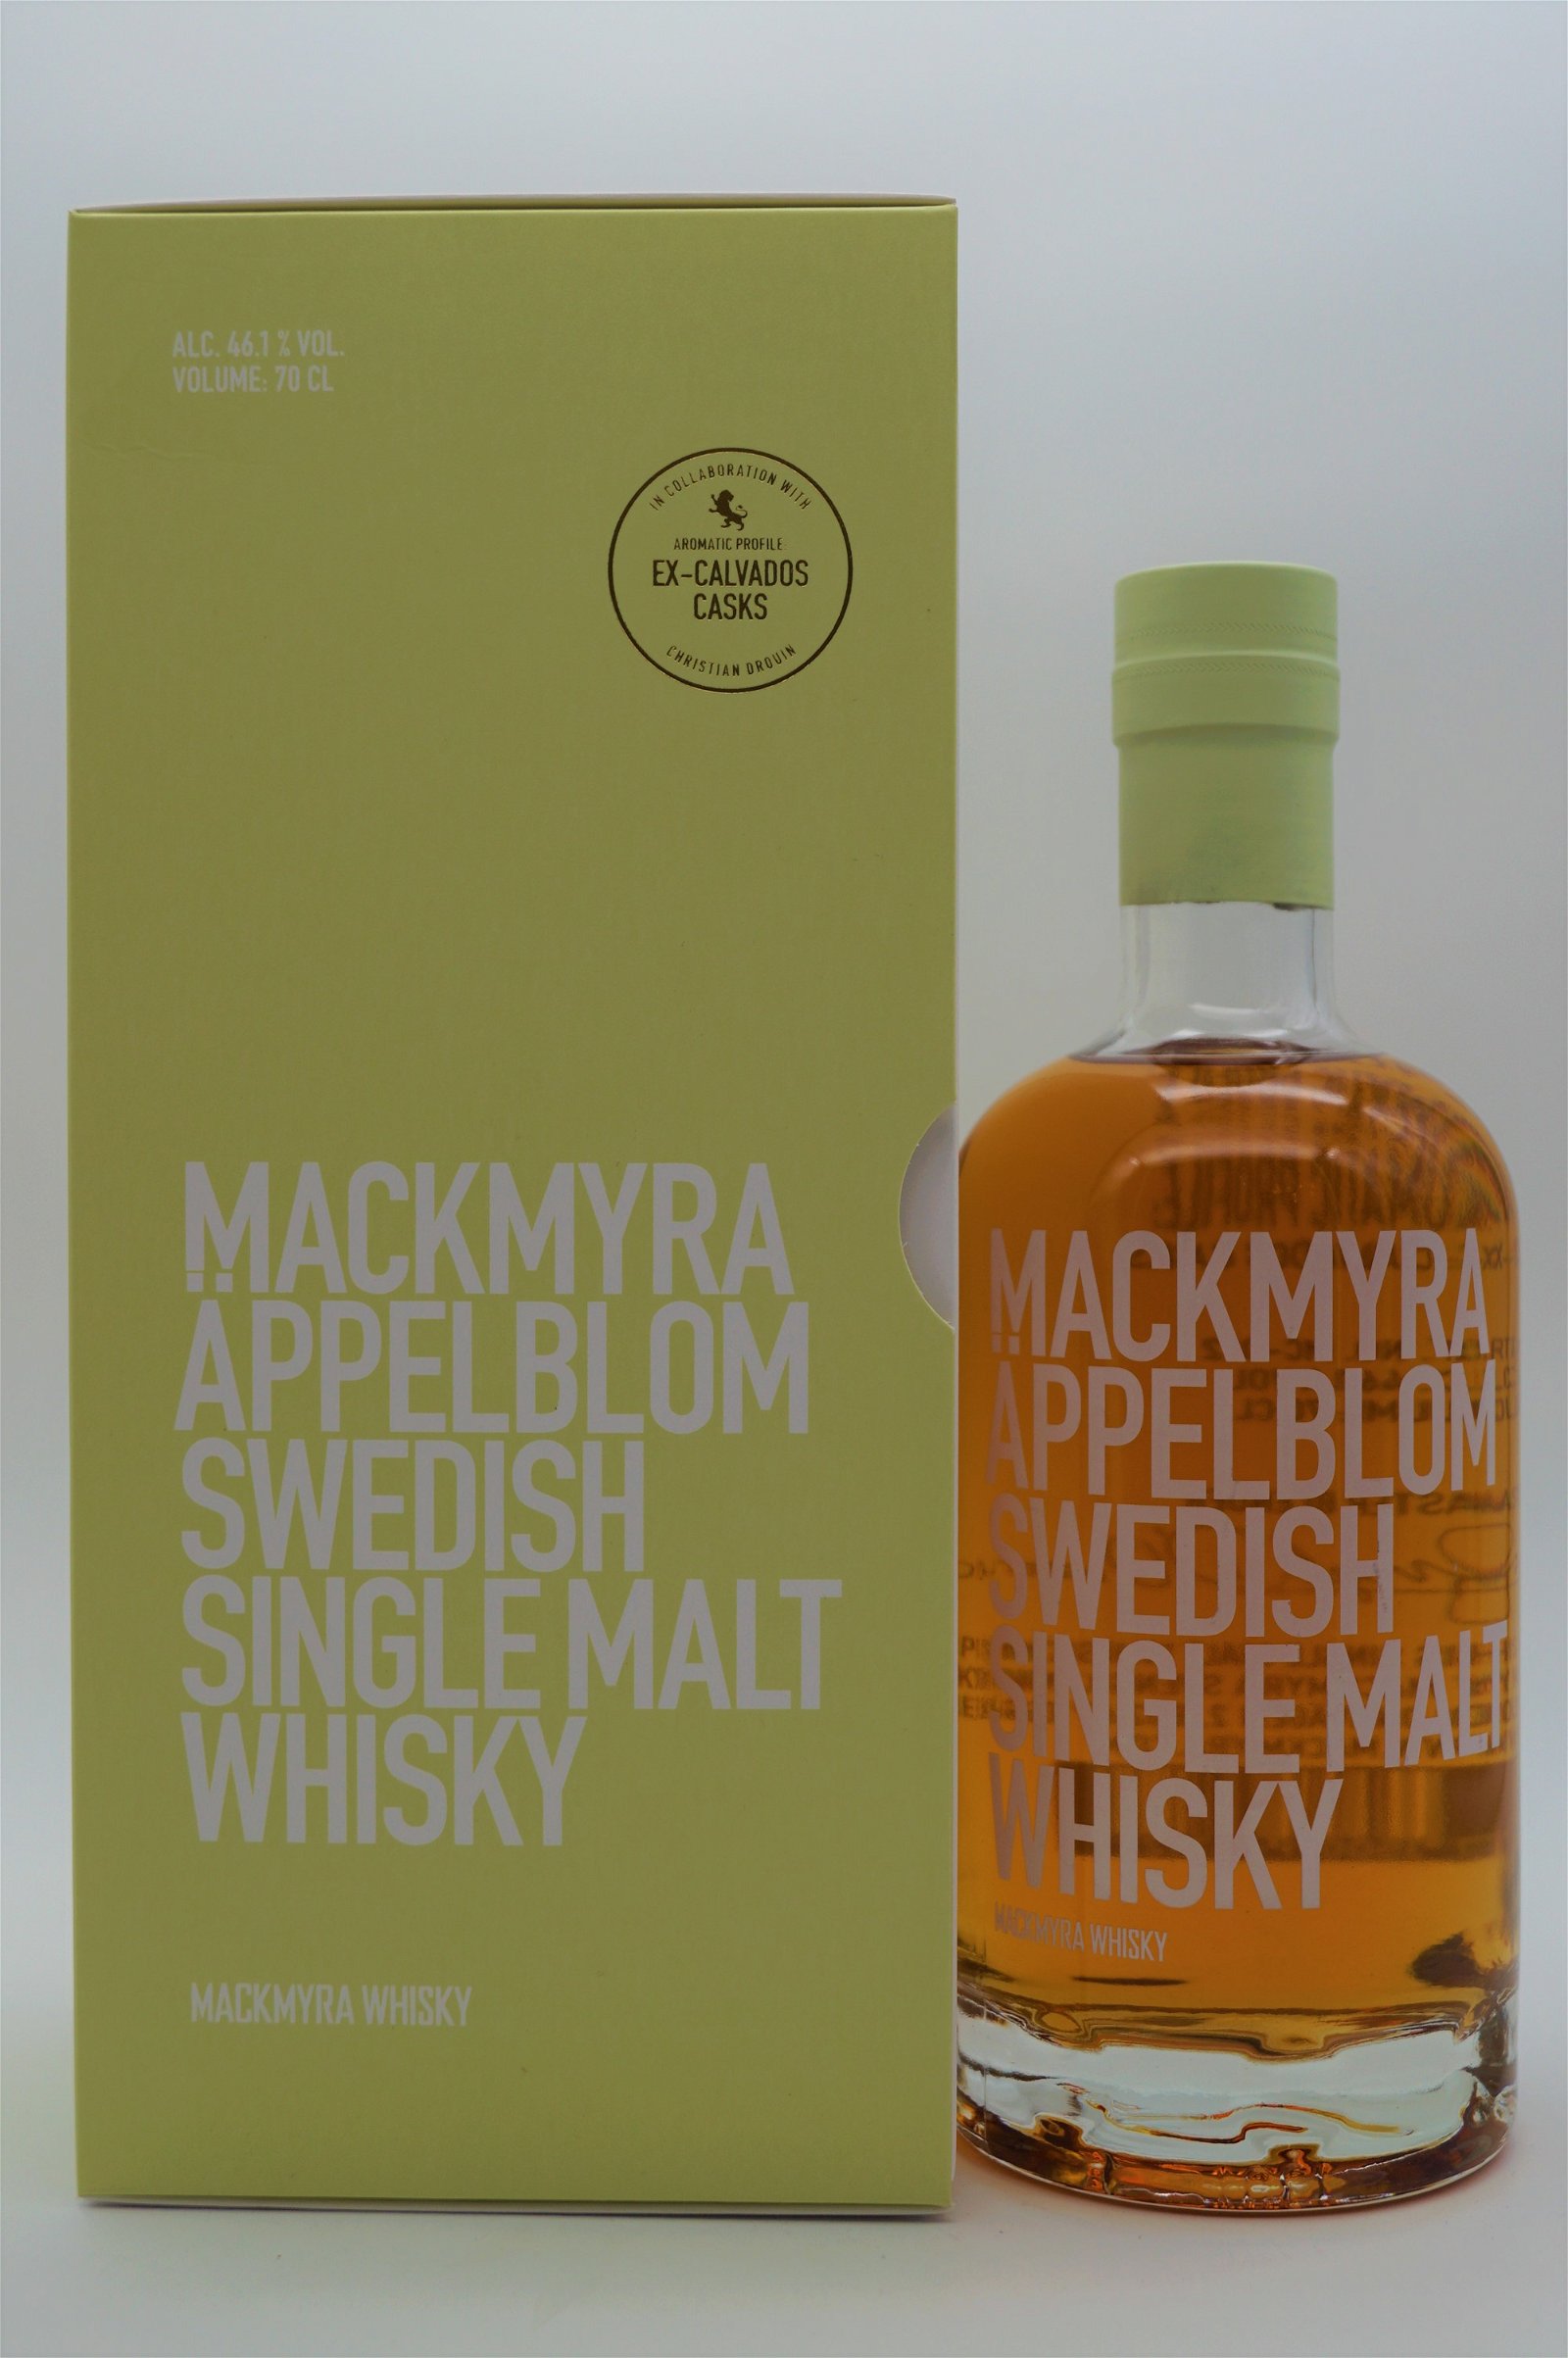 Mackmyra Äppleblom Swedish Single Malt Whisky